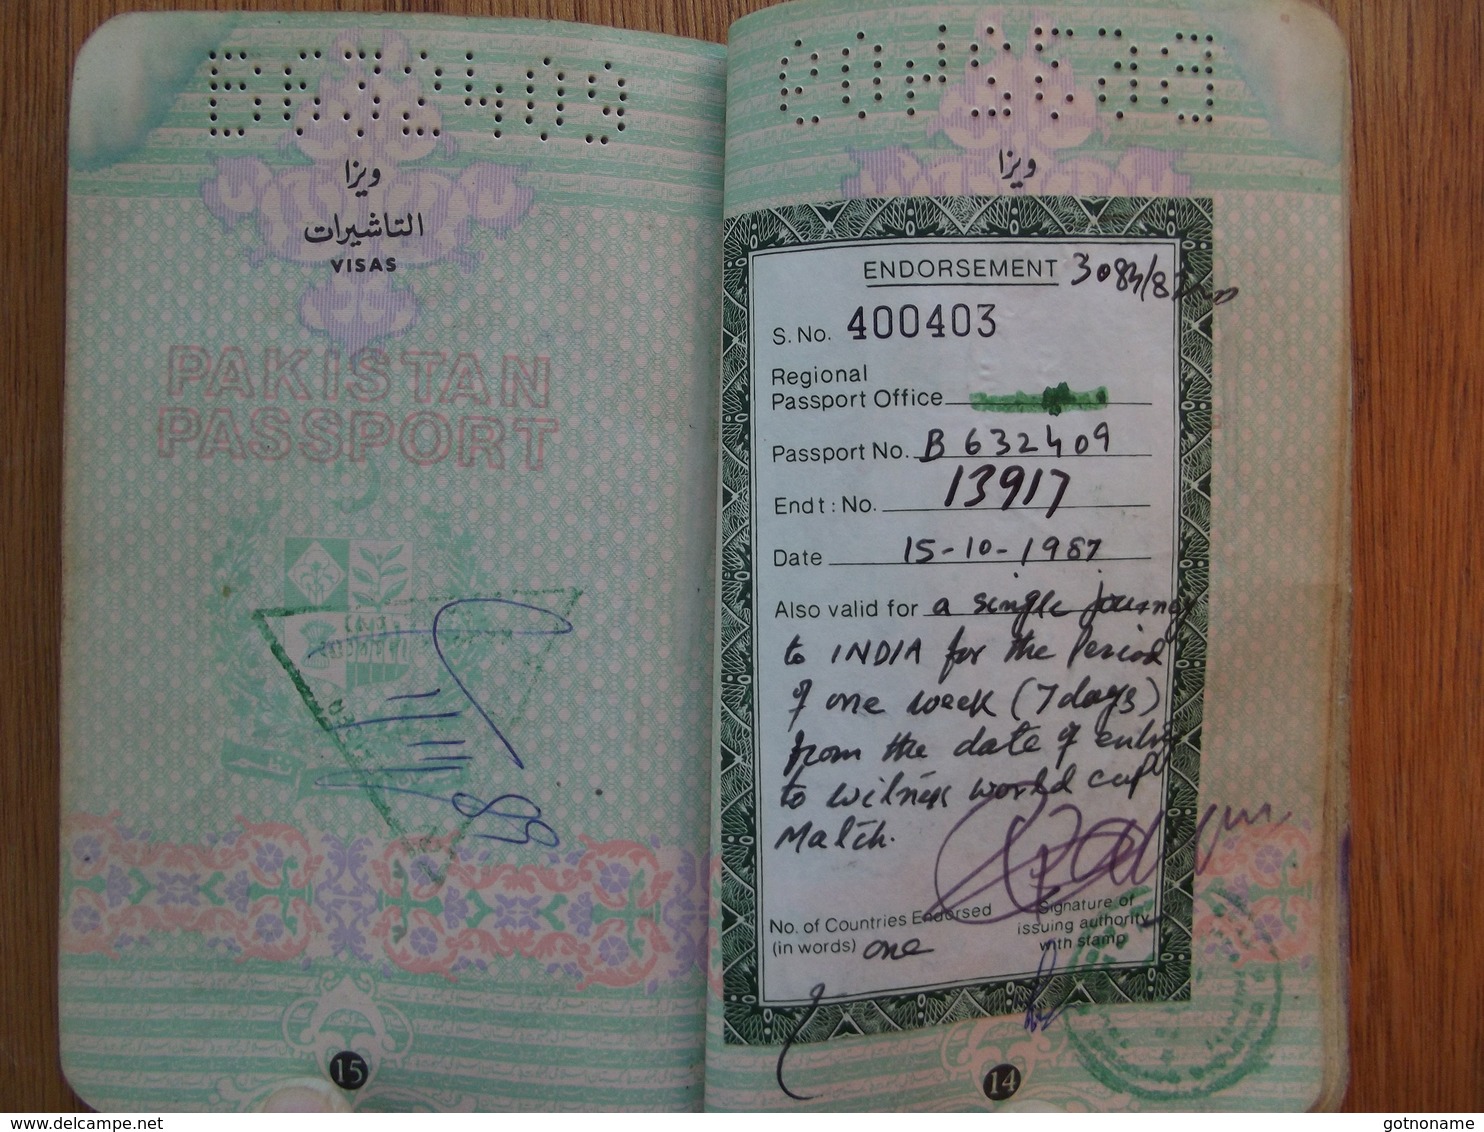 Passeport, passport, reisepass, pasaporte du Pakistan 1985. Plein de visas.Port gratuit en Europe.